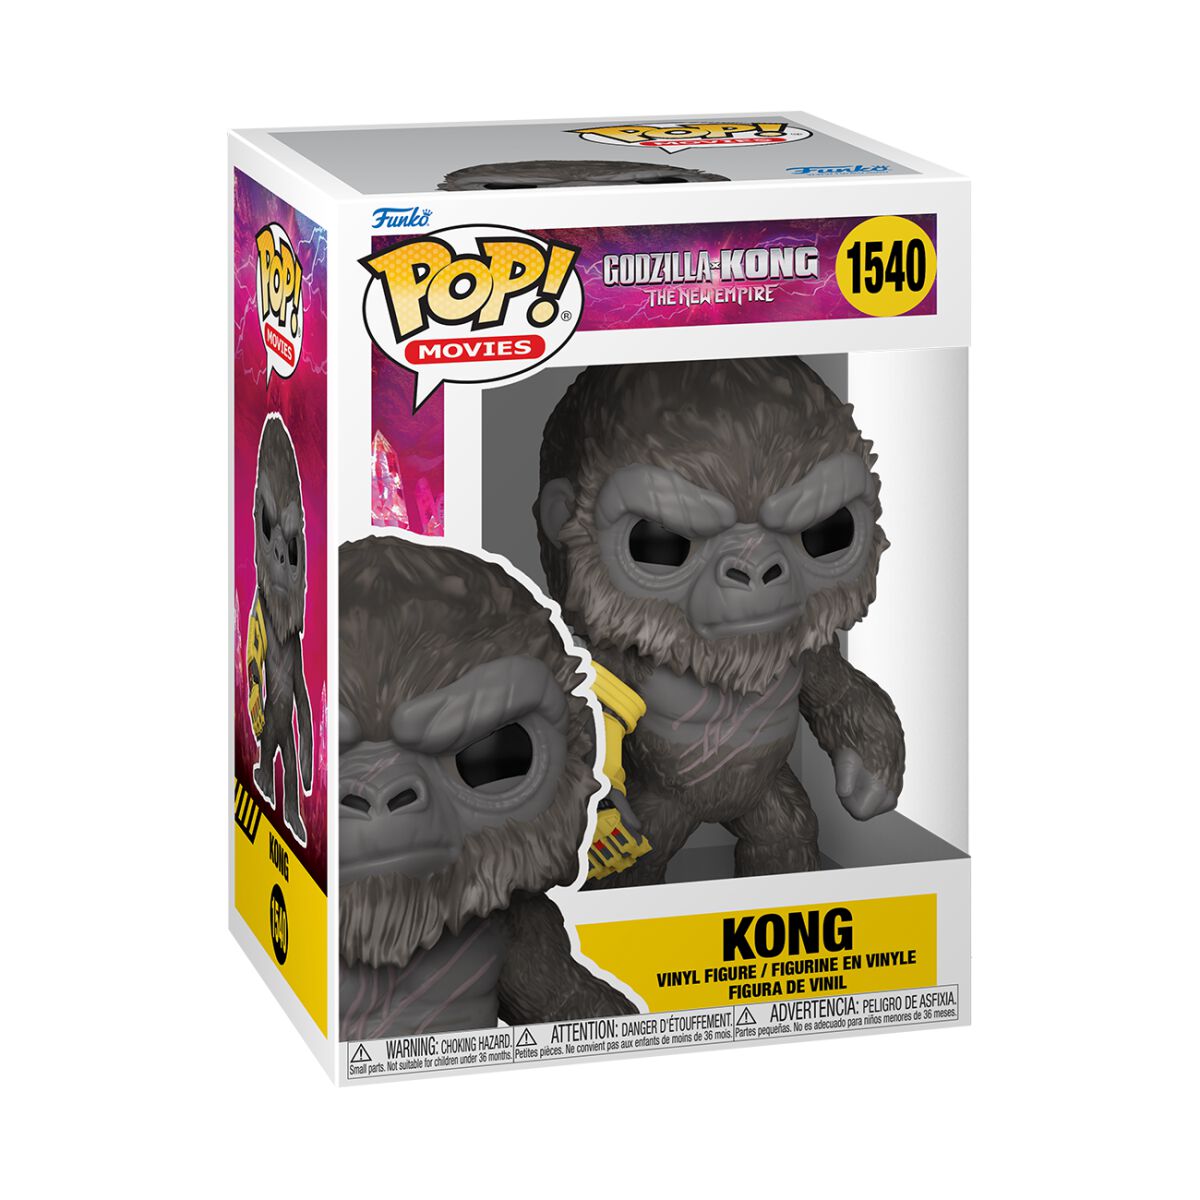 Godzilla vs. Kong - The New Empire - Kong Vinyl Figur 1540 - Funko Pop! Figur - Funko Shop Deutschland - Lizenzierter Fanartikel